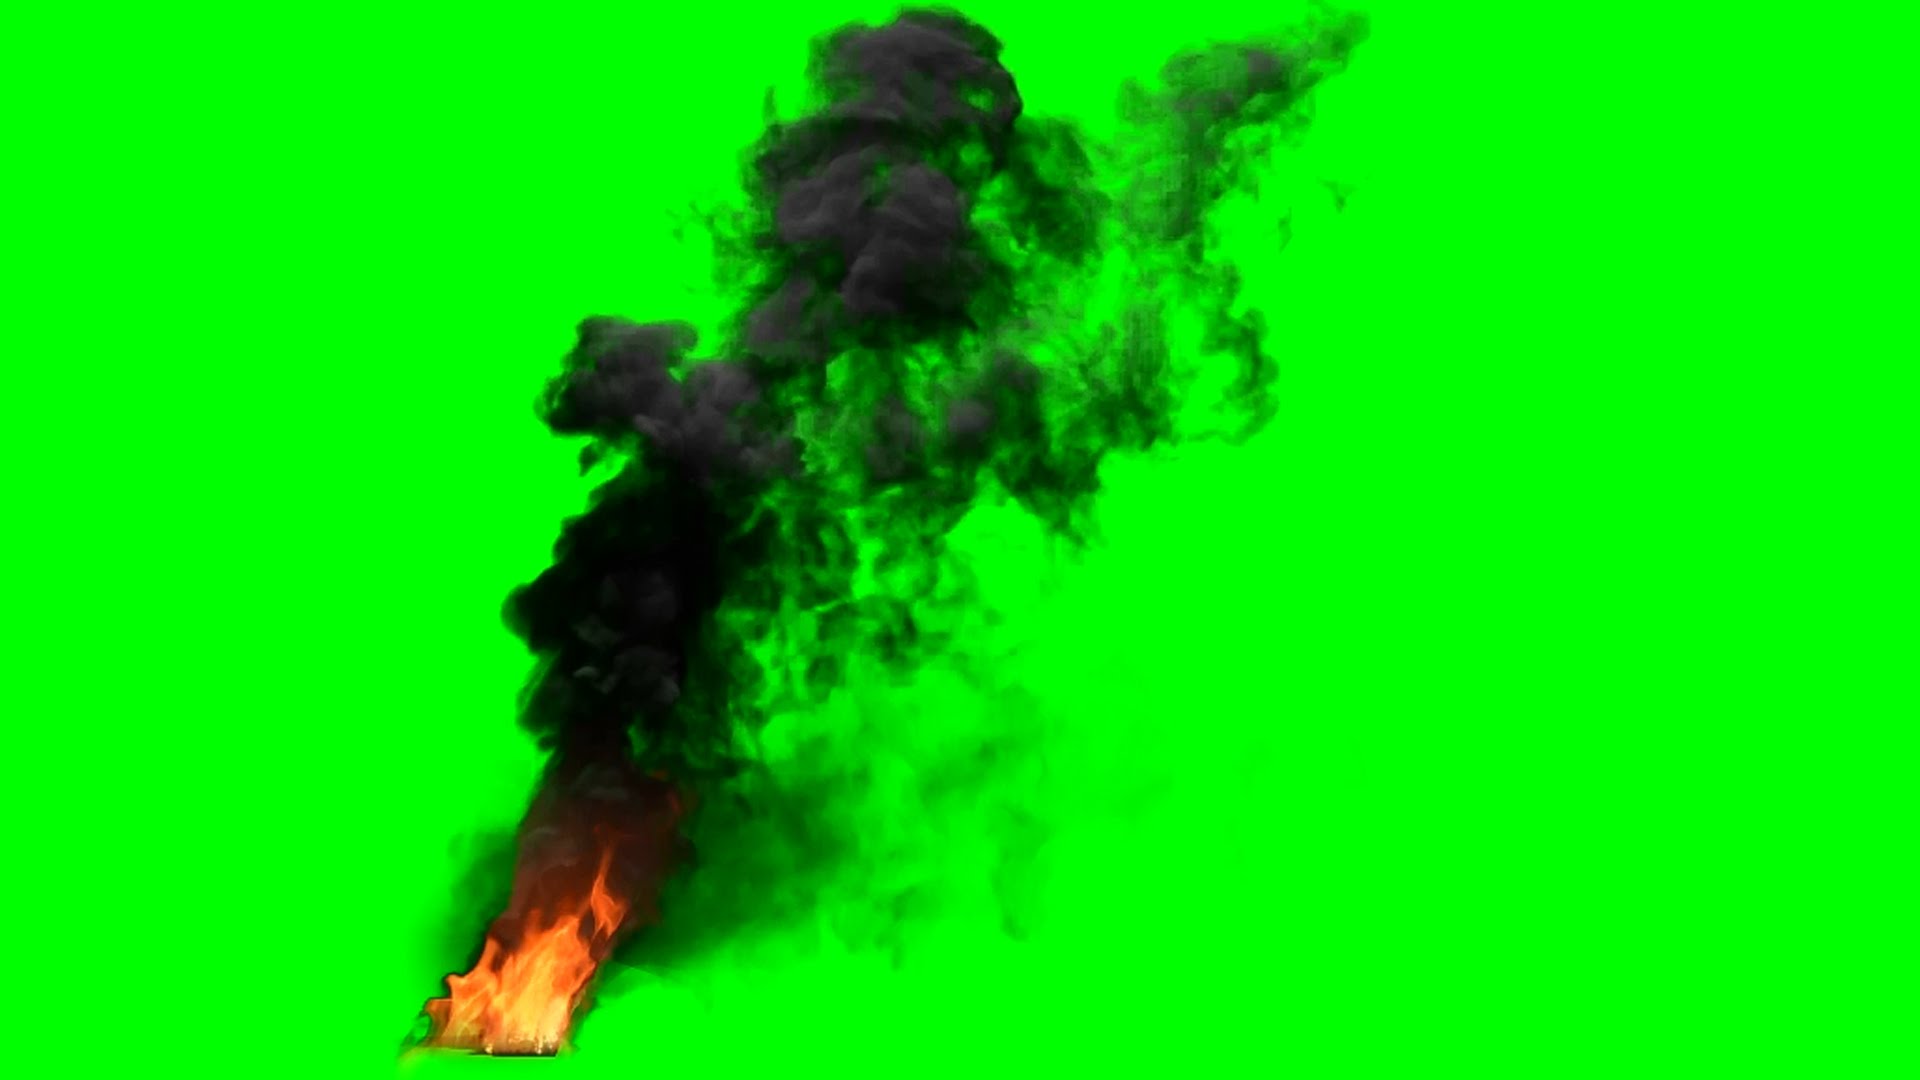 Fire Smoke on Green Screen - YouTube